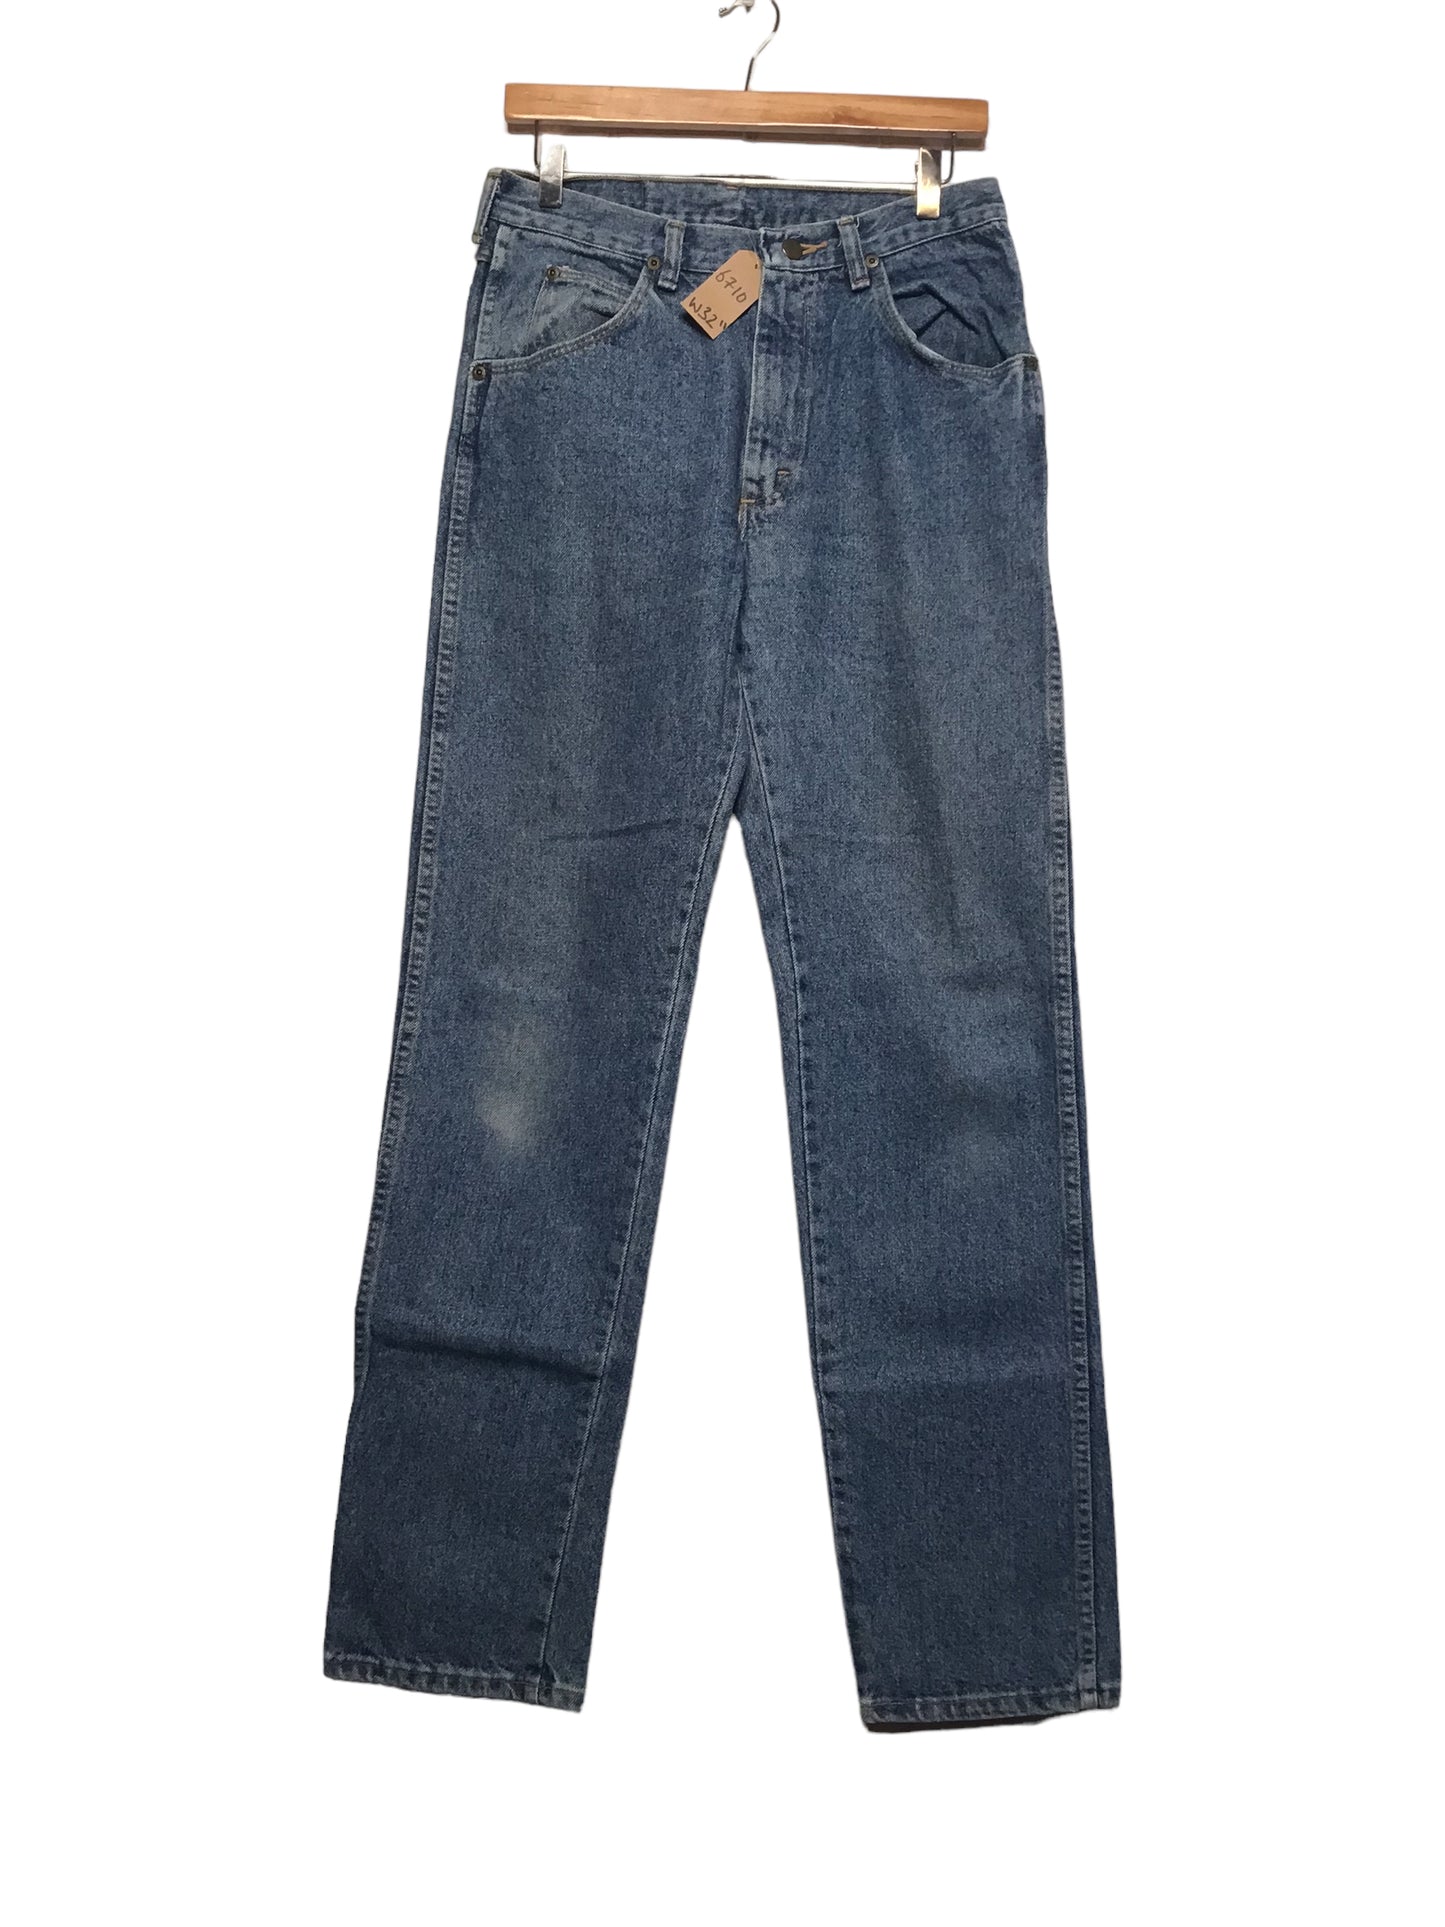 Wrangler Jeans (31x34)